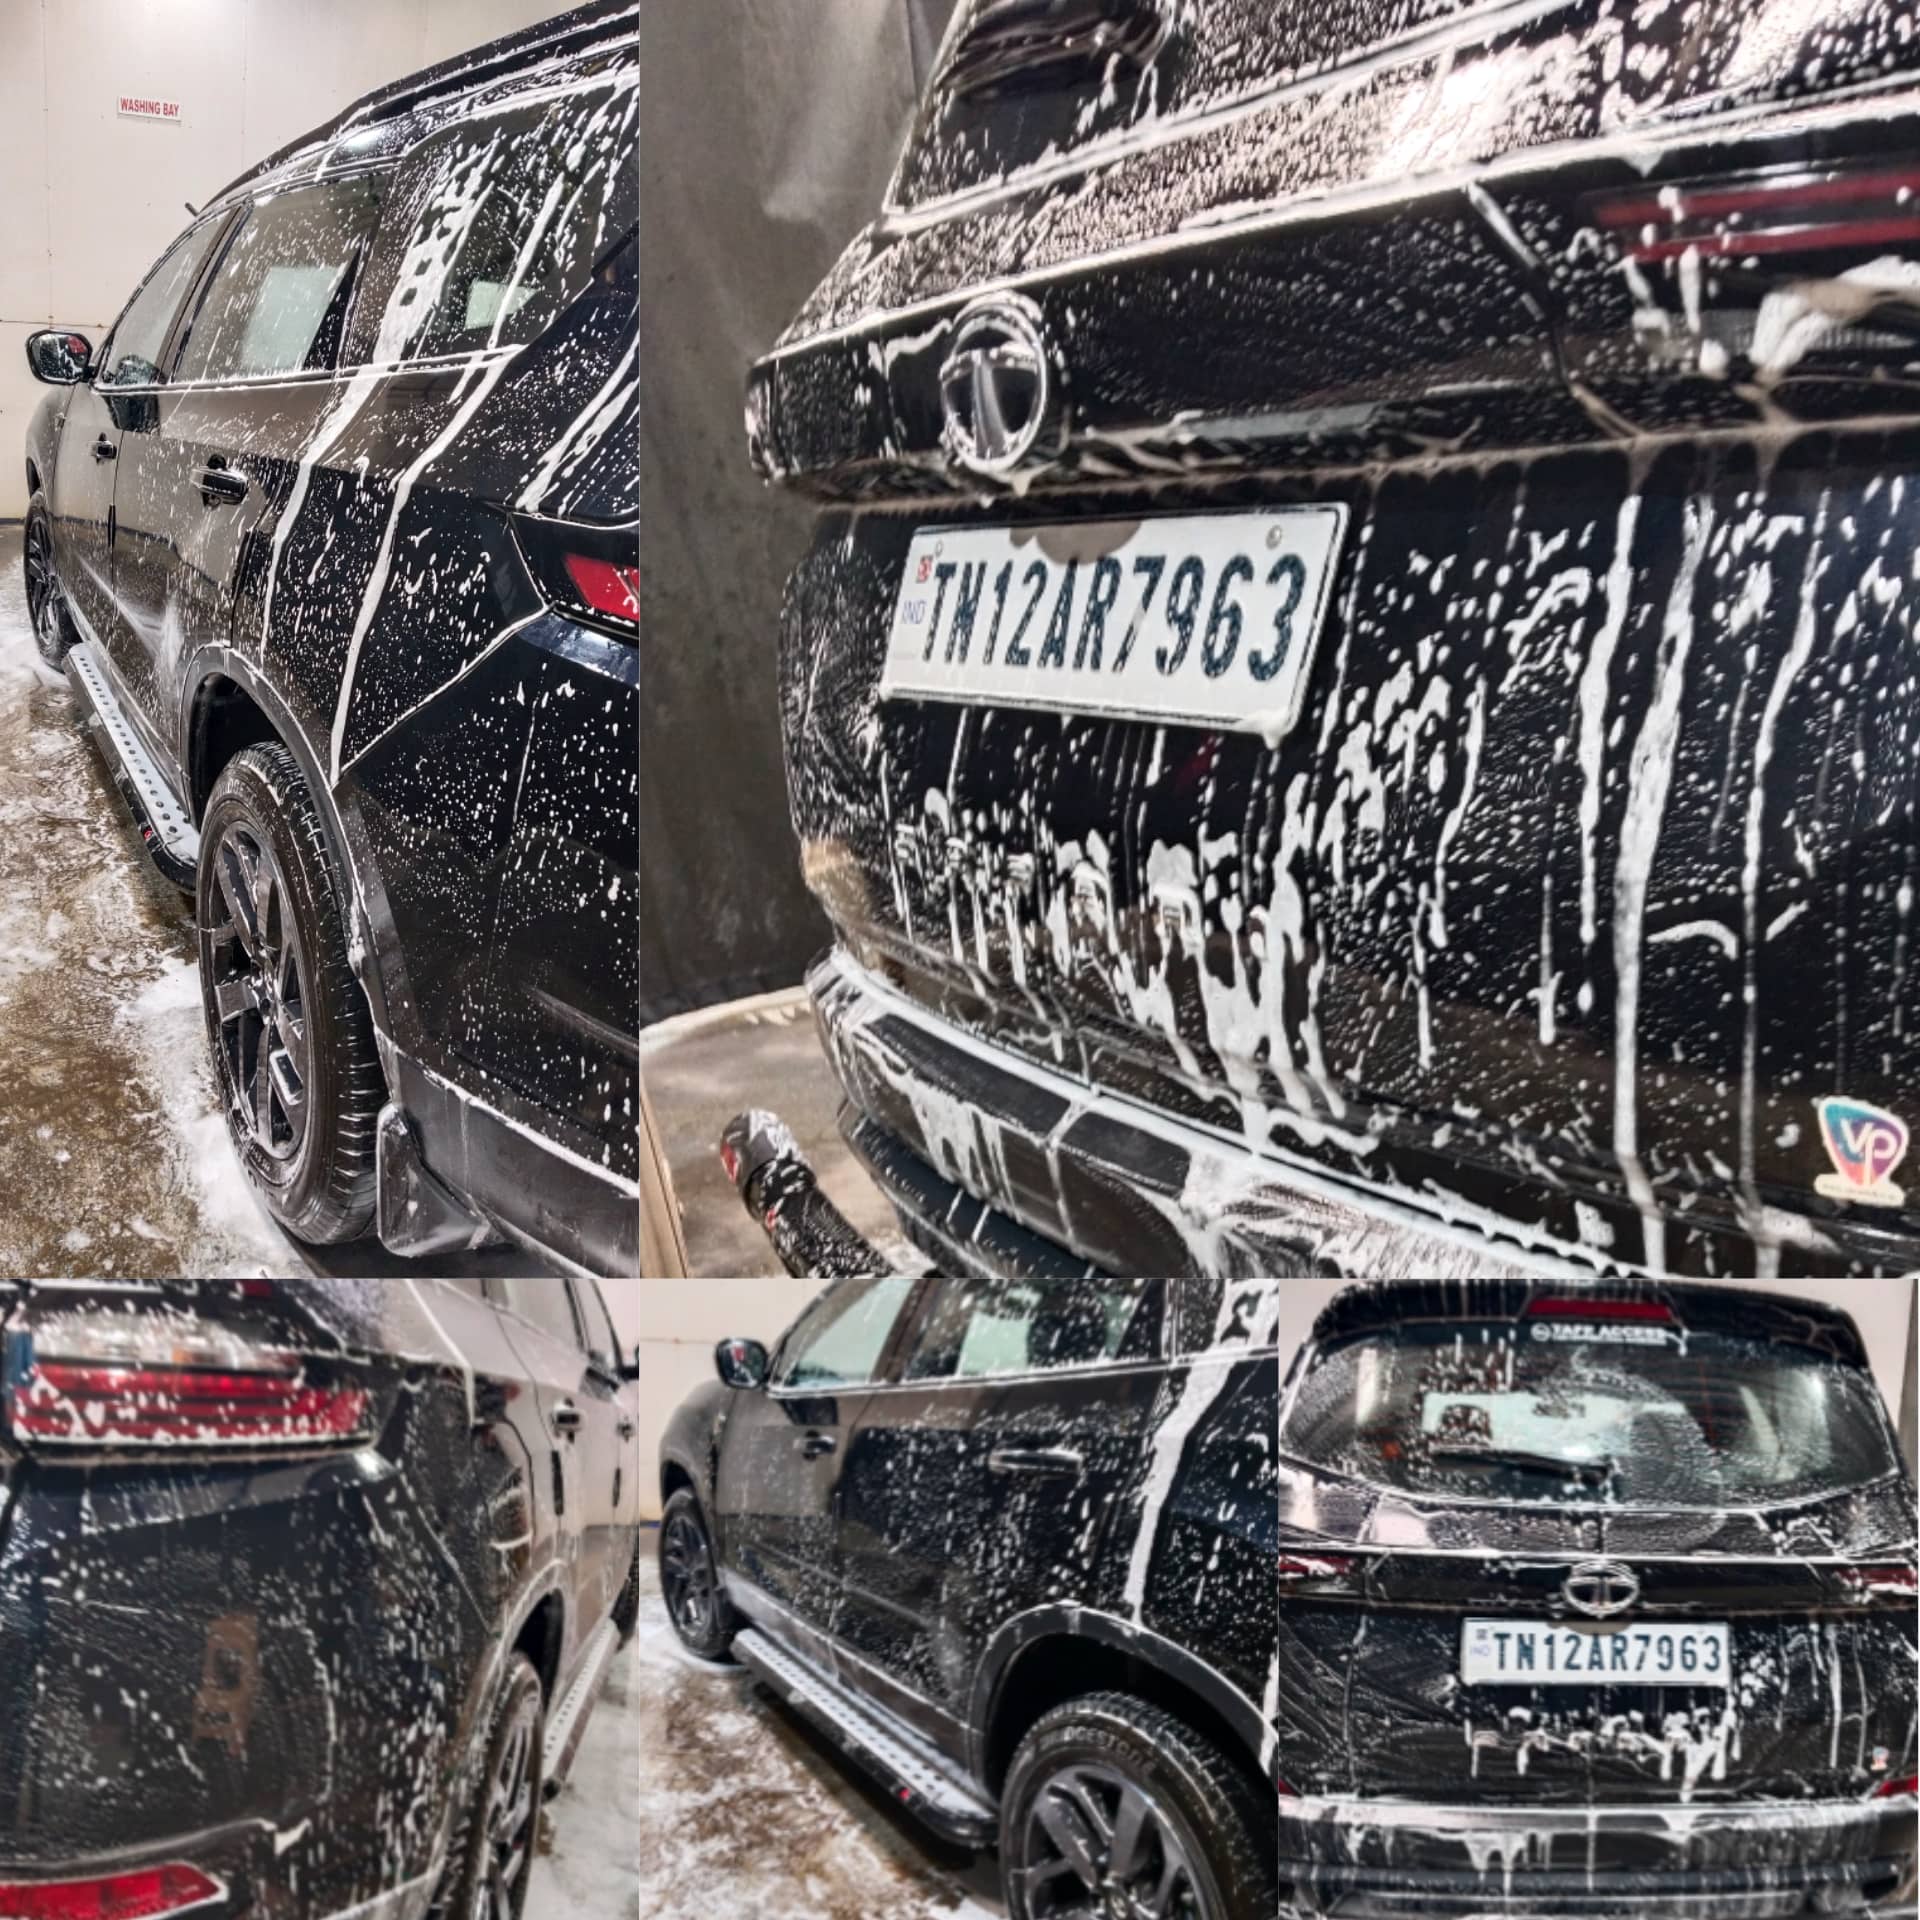 BMW 720 LI after a Premium car wash